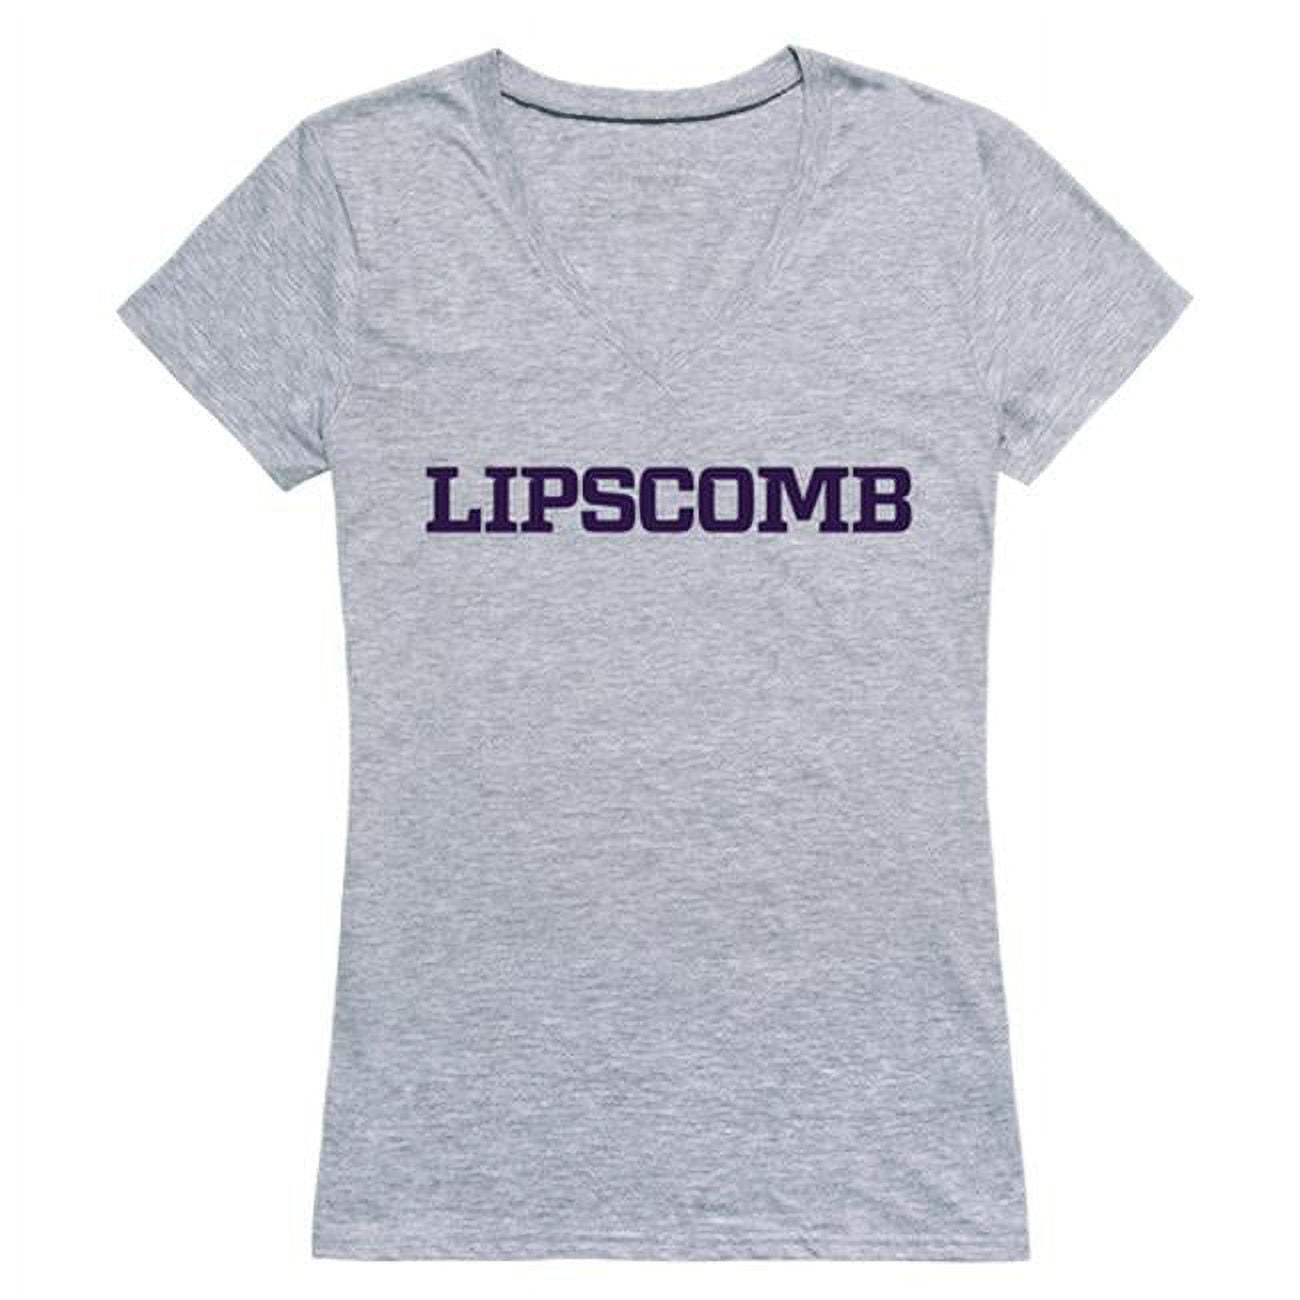 W Republic 520-328-H08-01 Lipscomb University Seal T-Shirt for